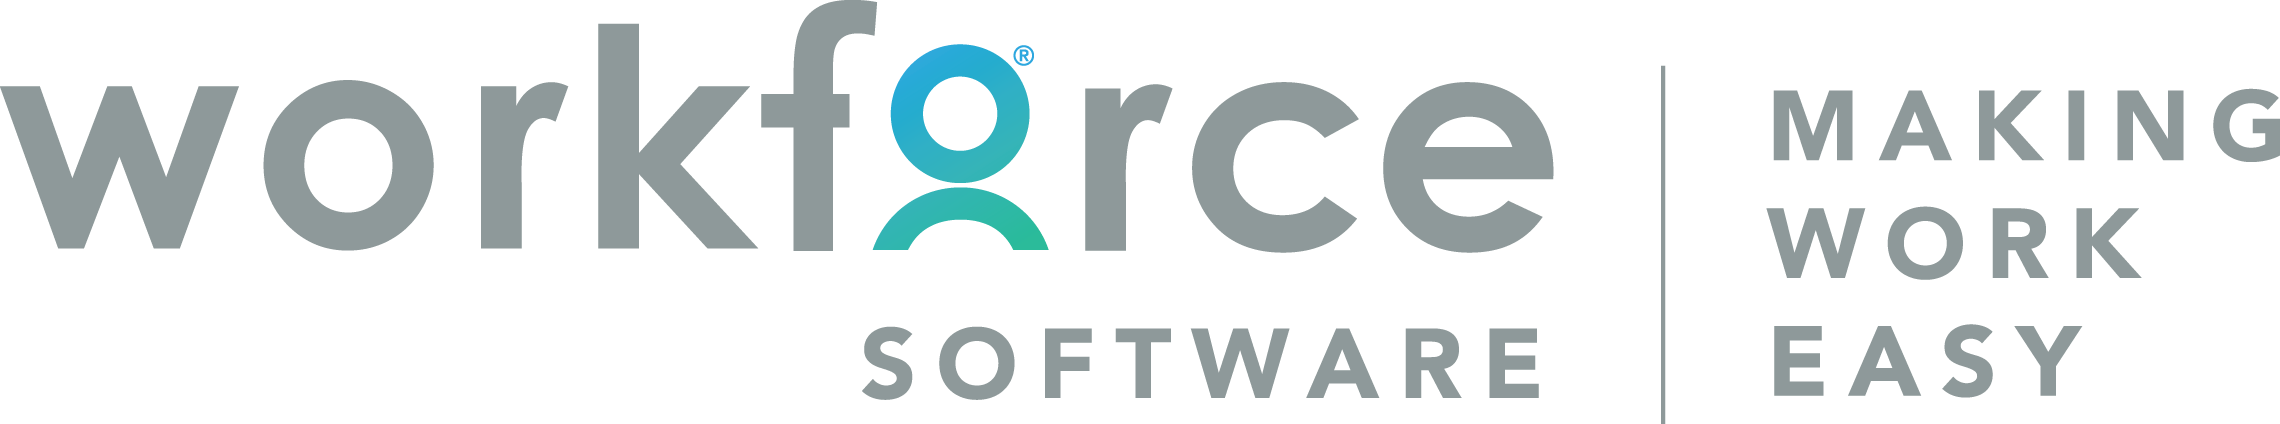 WorkForce Software Company Logo